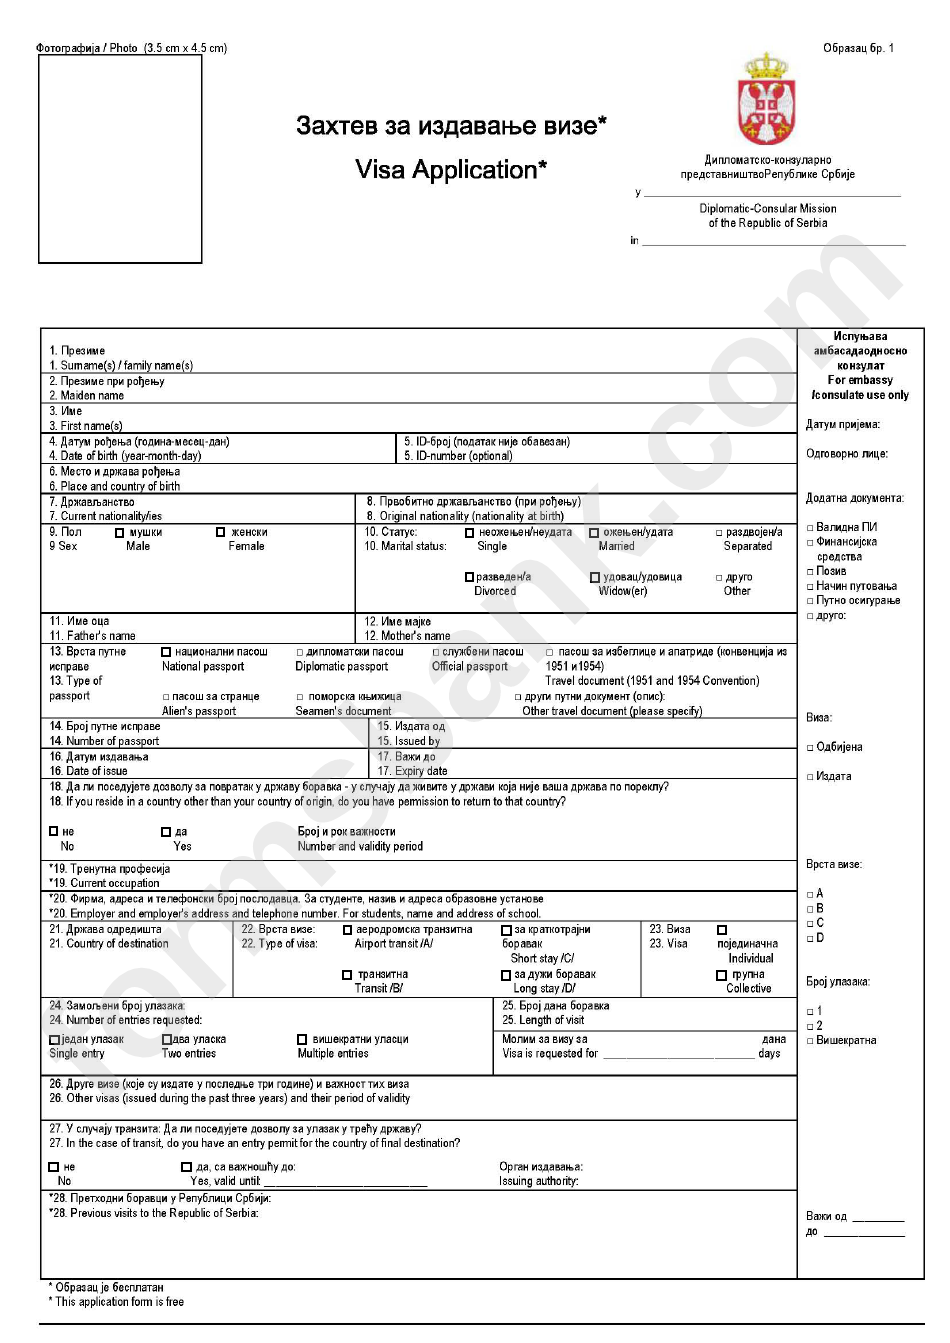 Serbia Visa Application Form